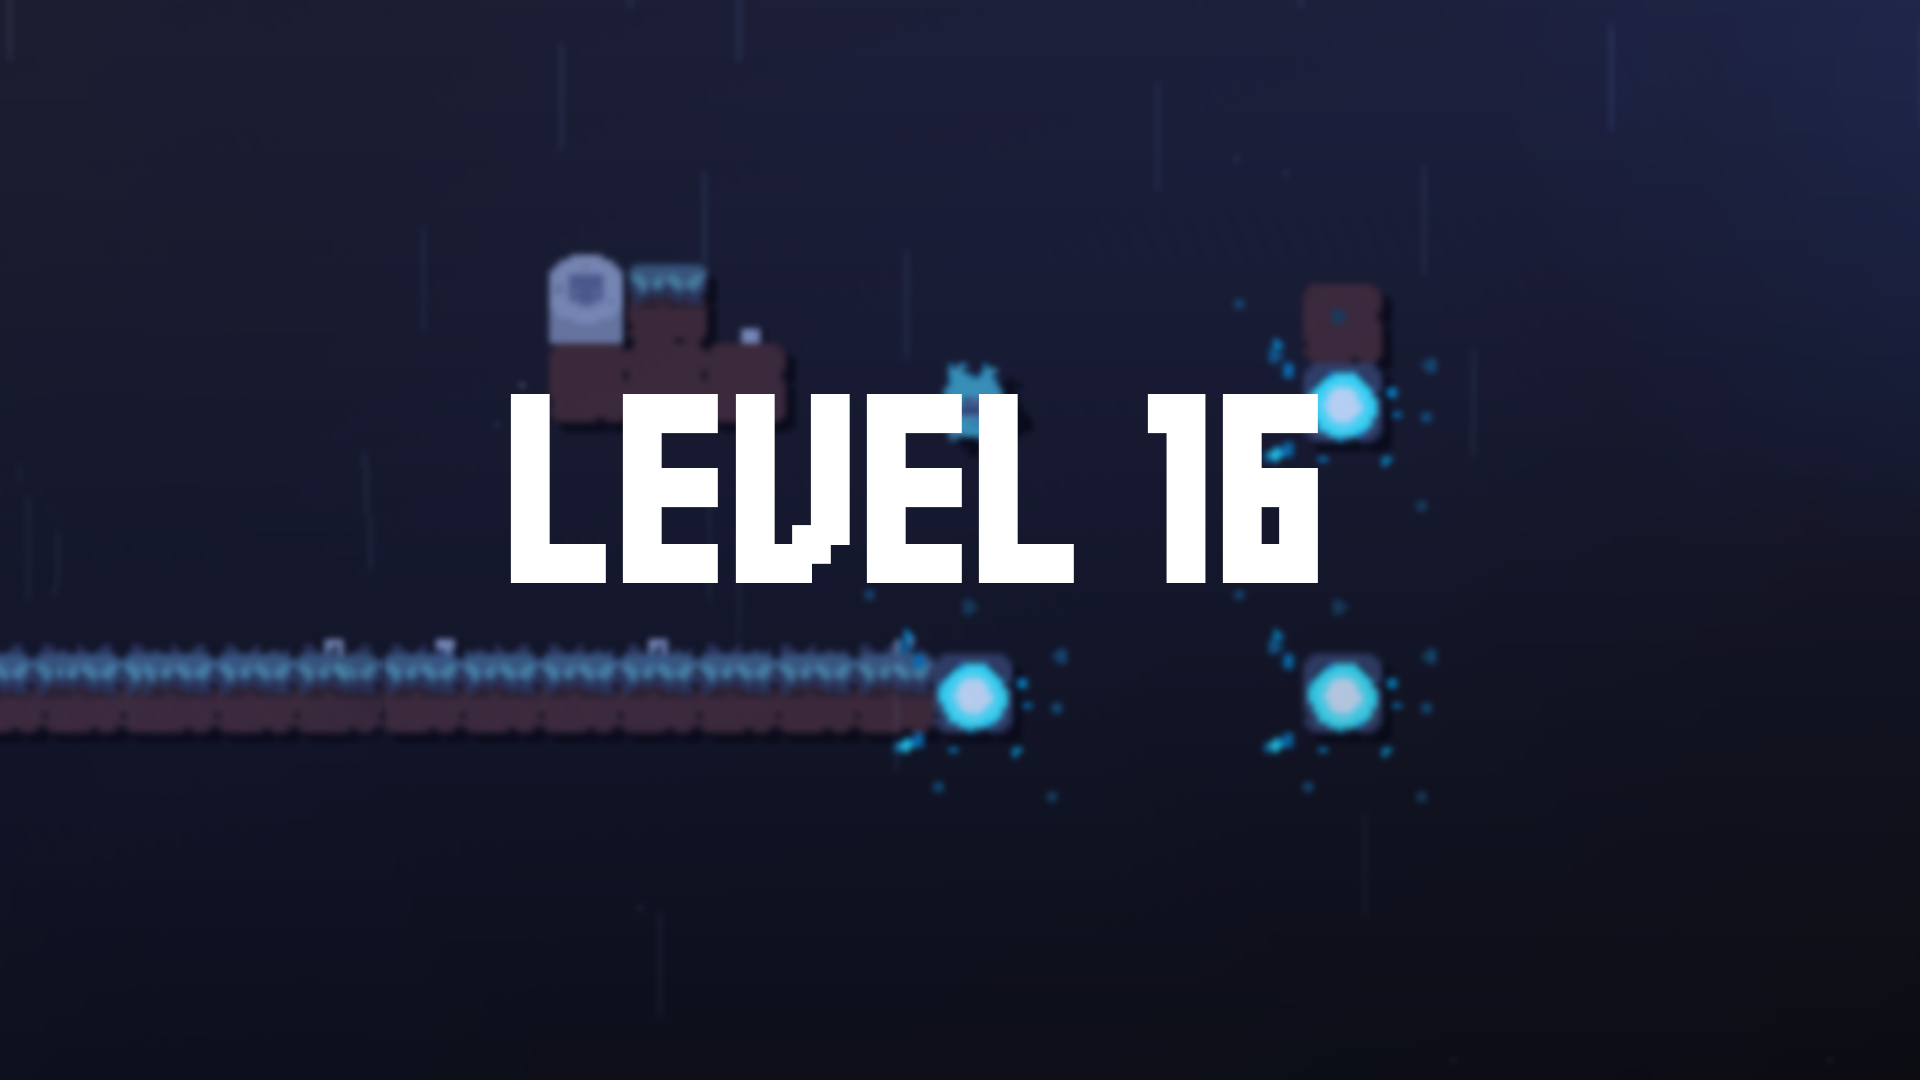 Level 16